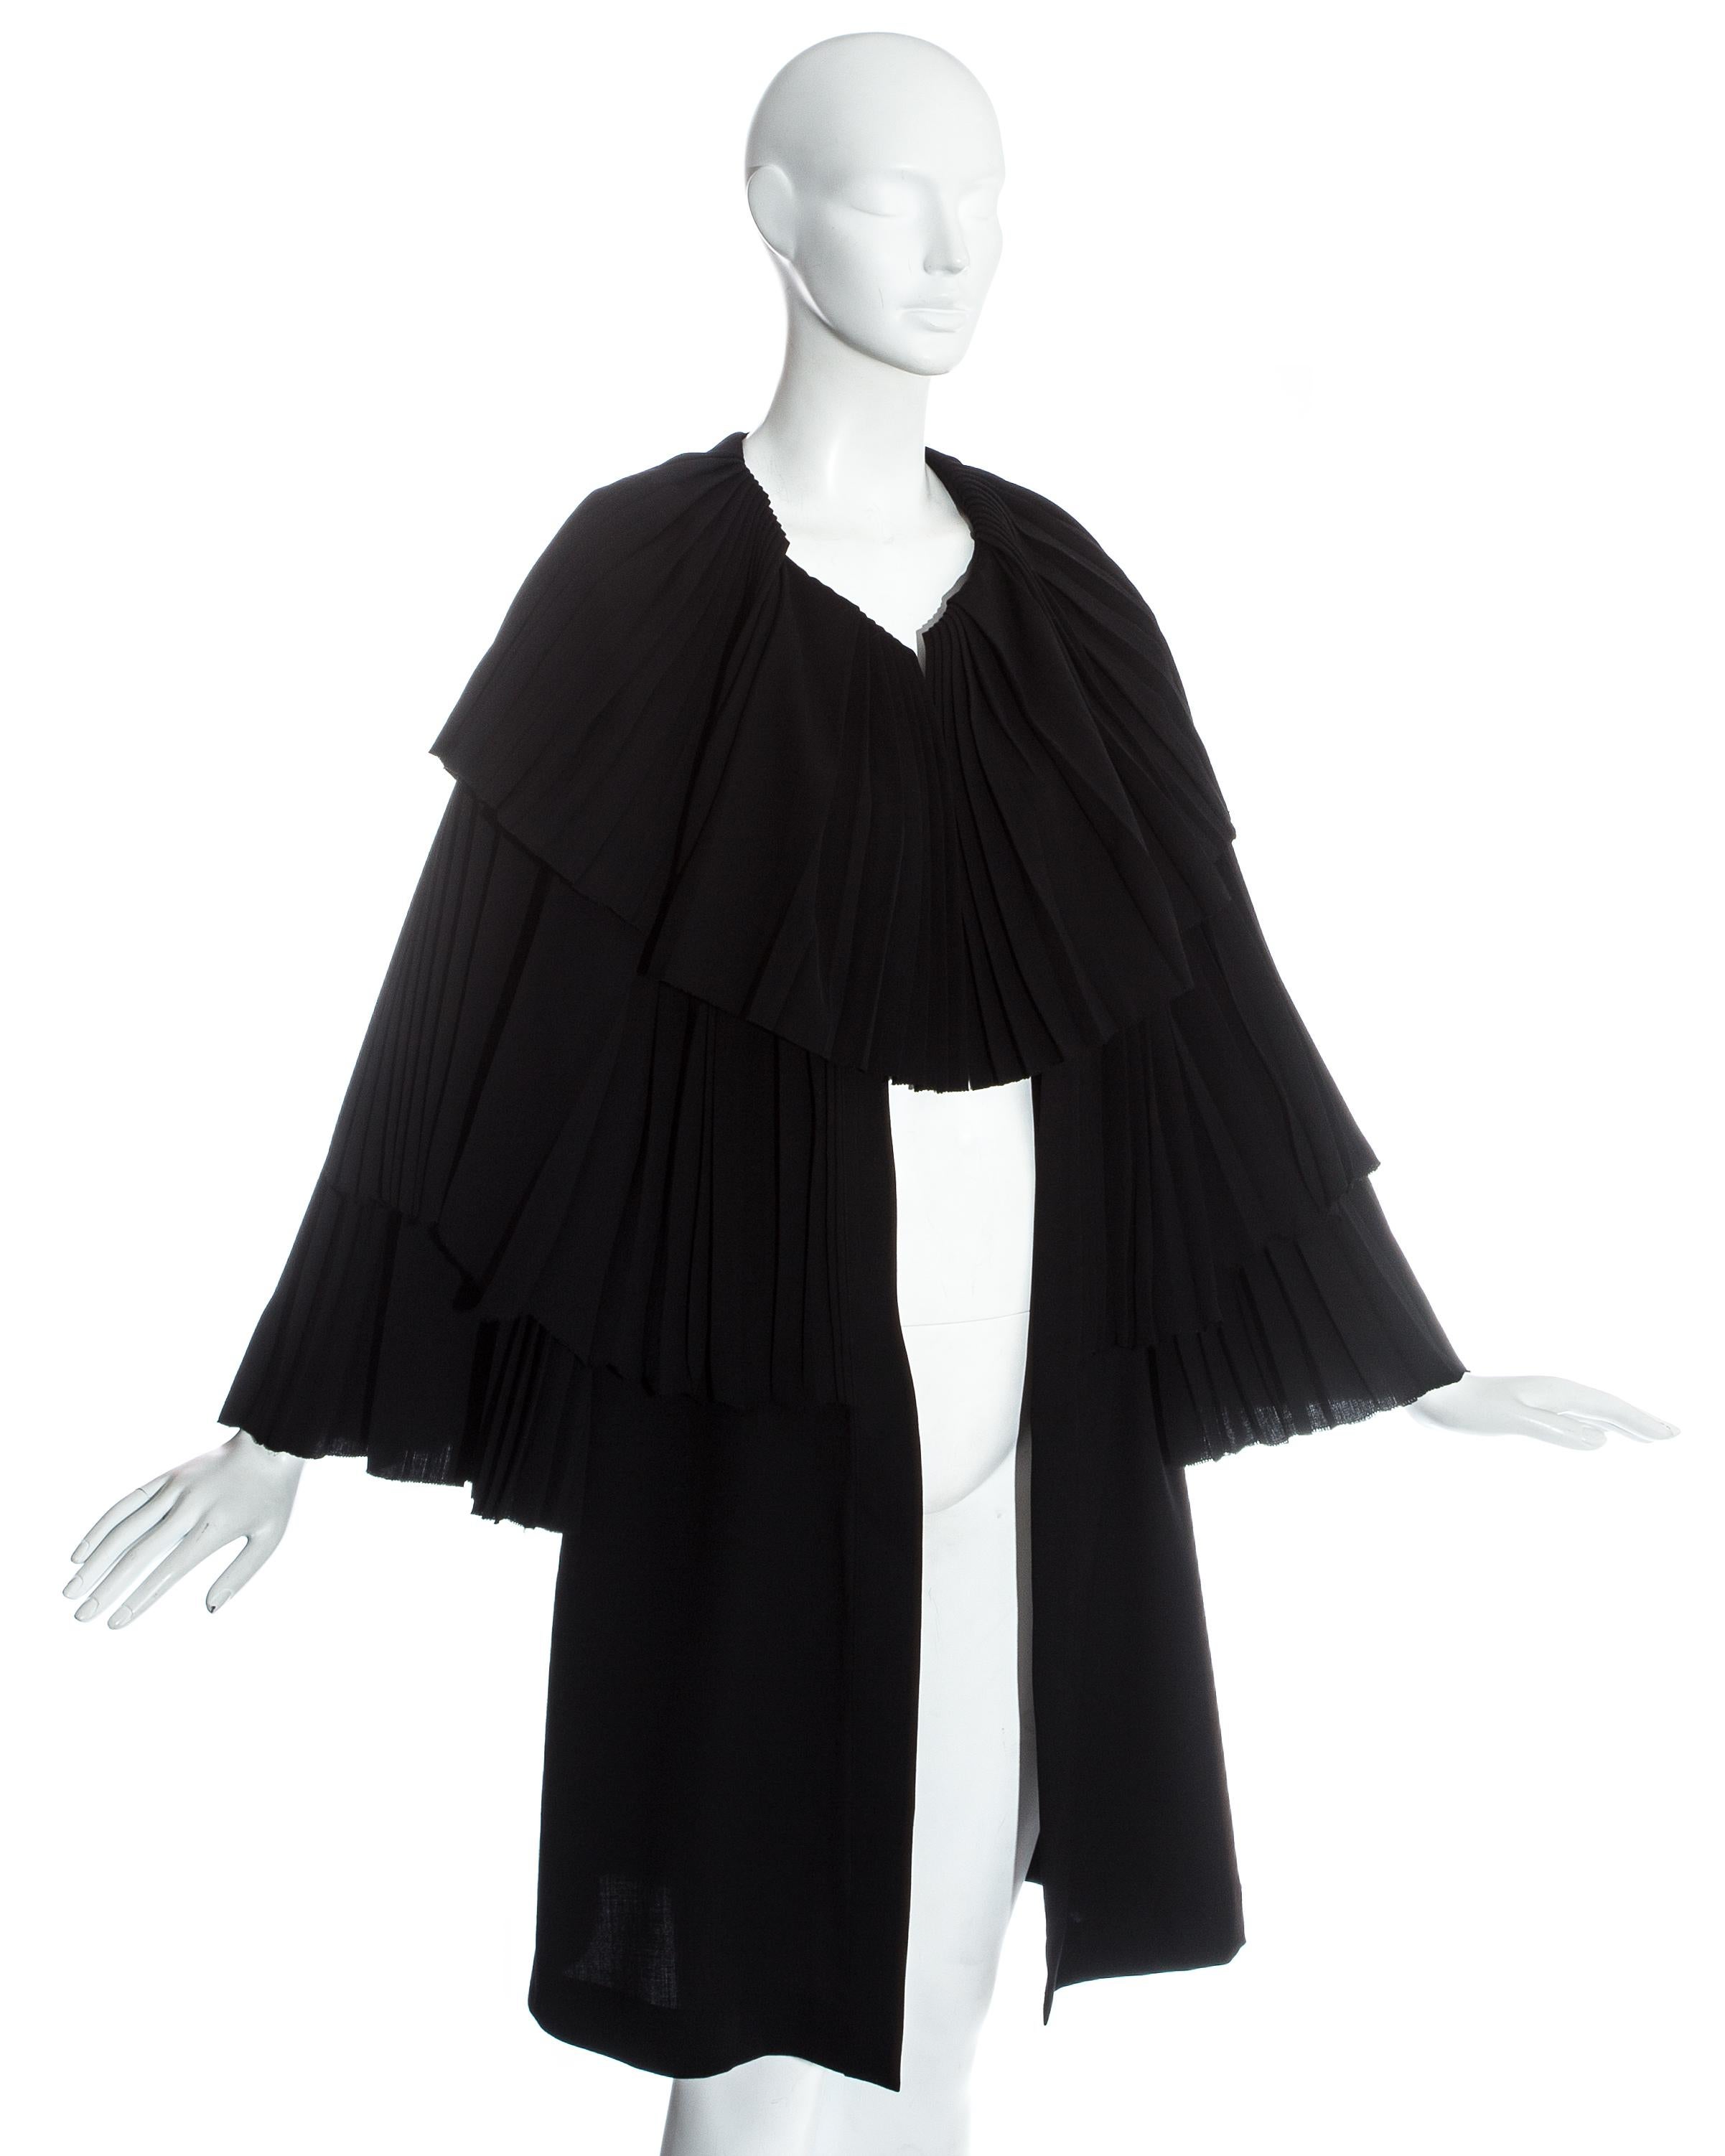 Yohji Yamamoto black wool pleated evening cape

c. 1990